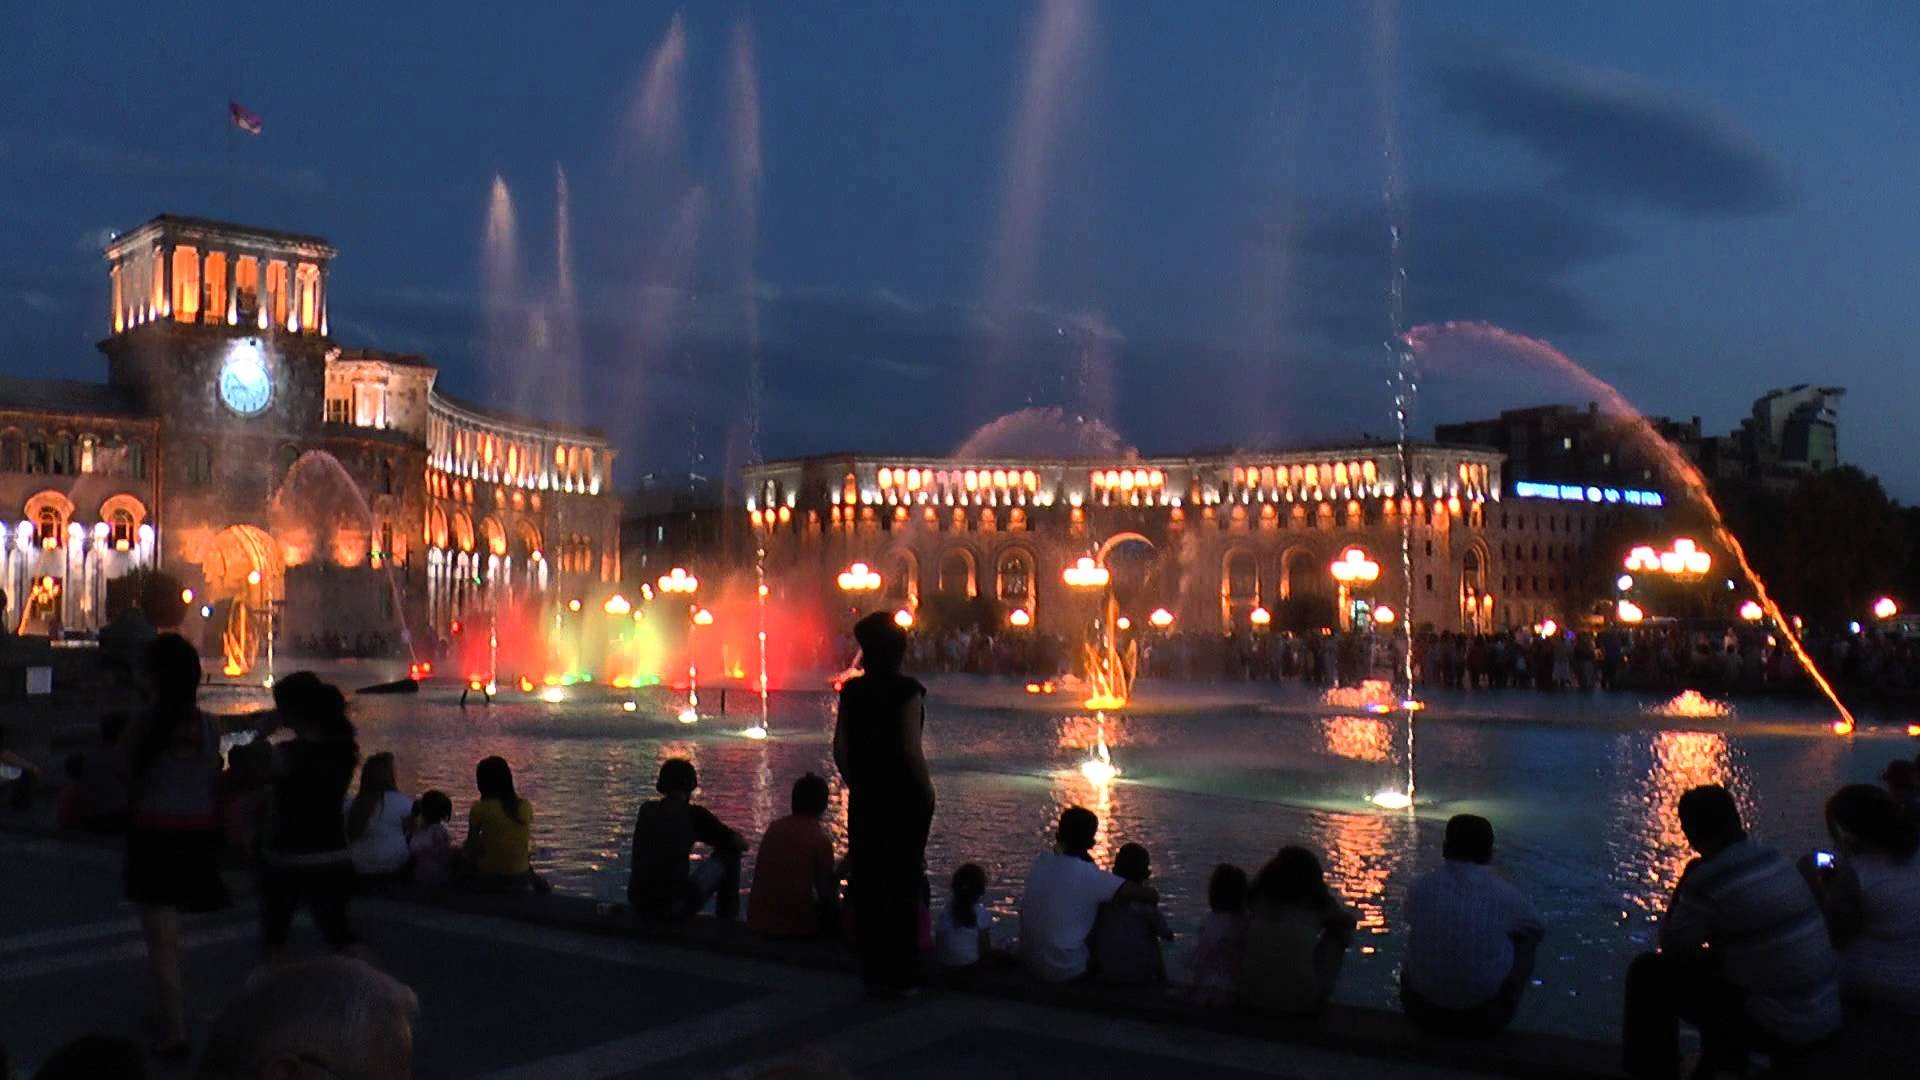 Ереван раньше. Площадь Республики Ереван. Площадь Республики Ереван ночью. Центральная площадь Еревана. Площадь Республики Ереван зимой.